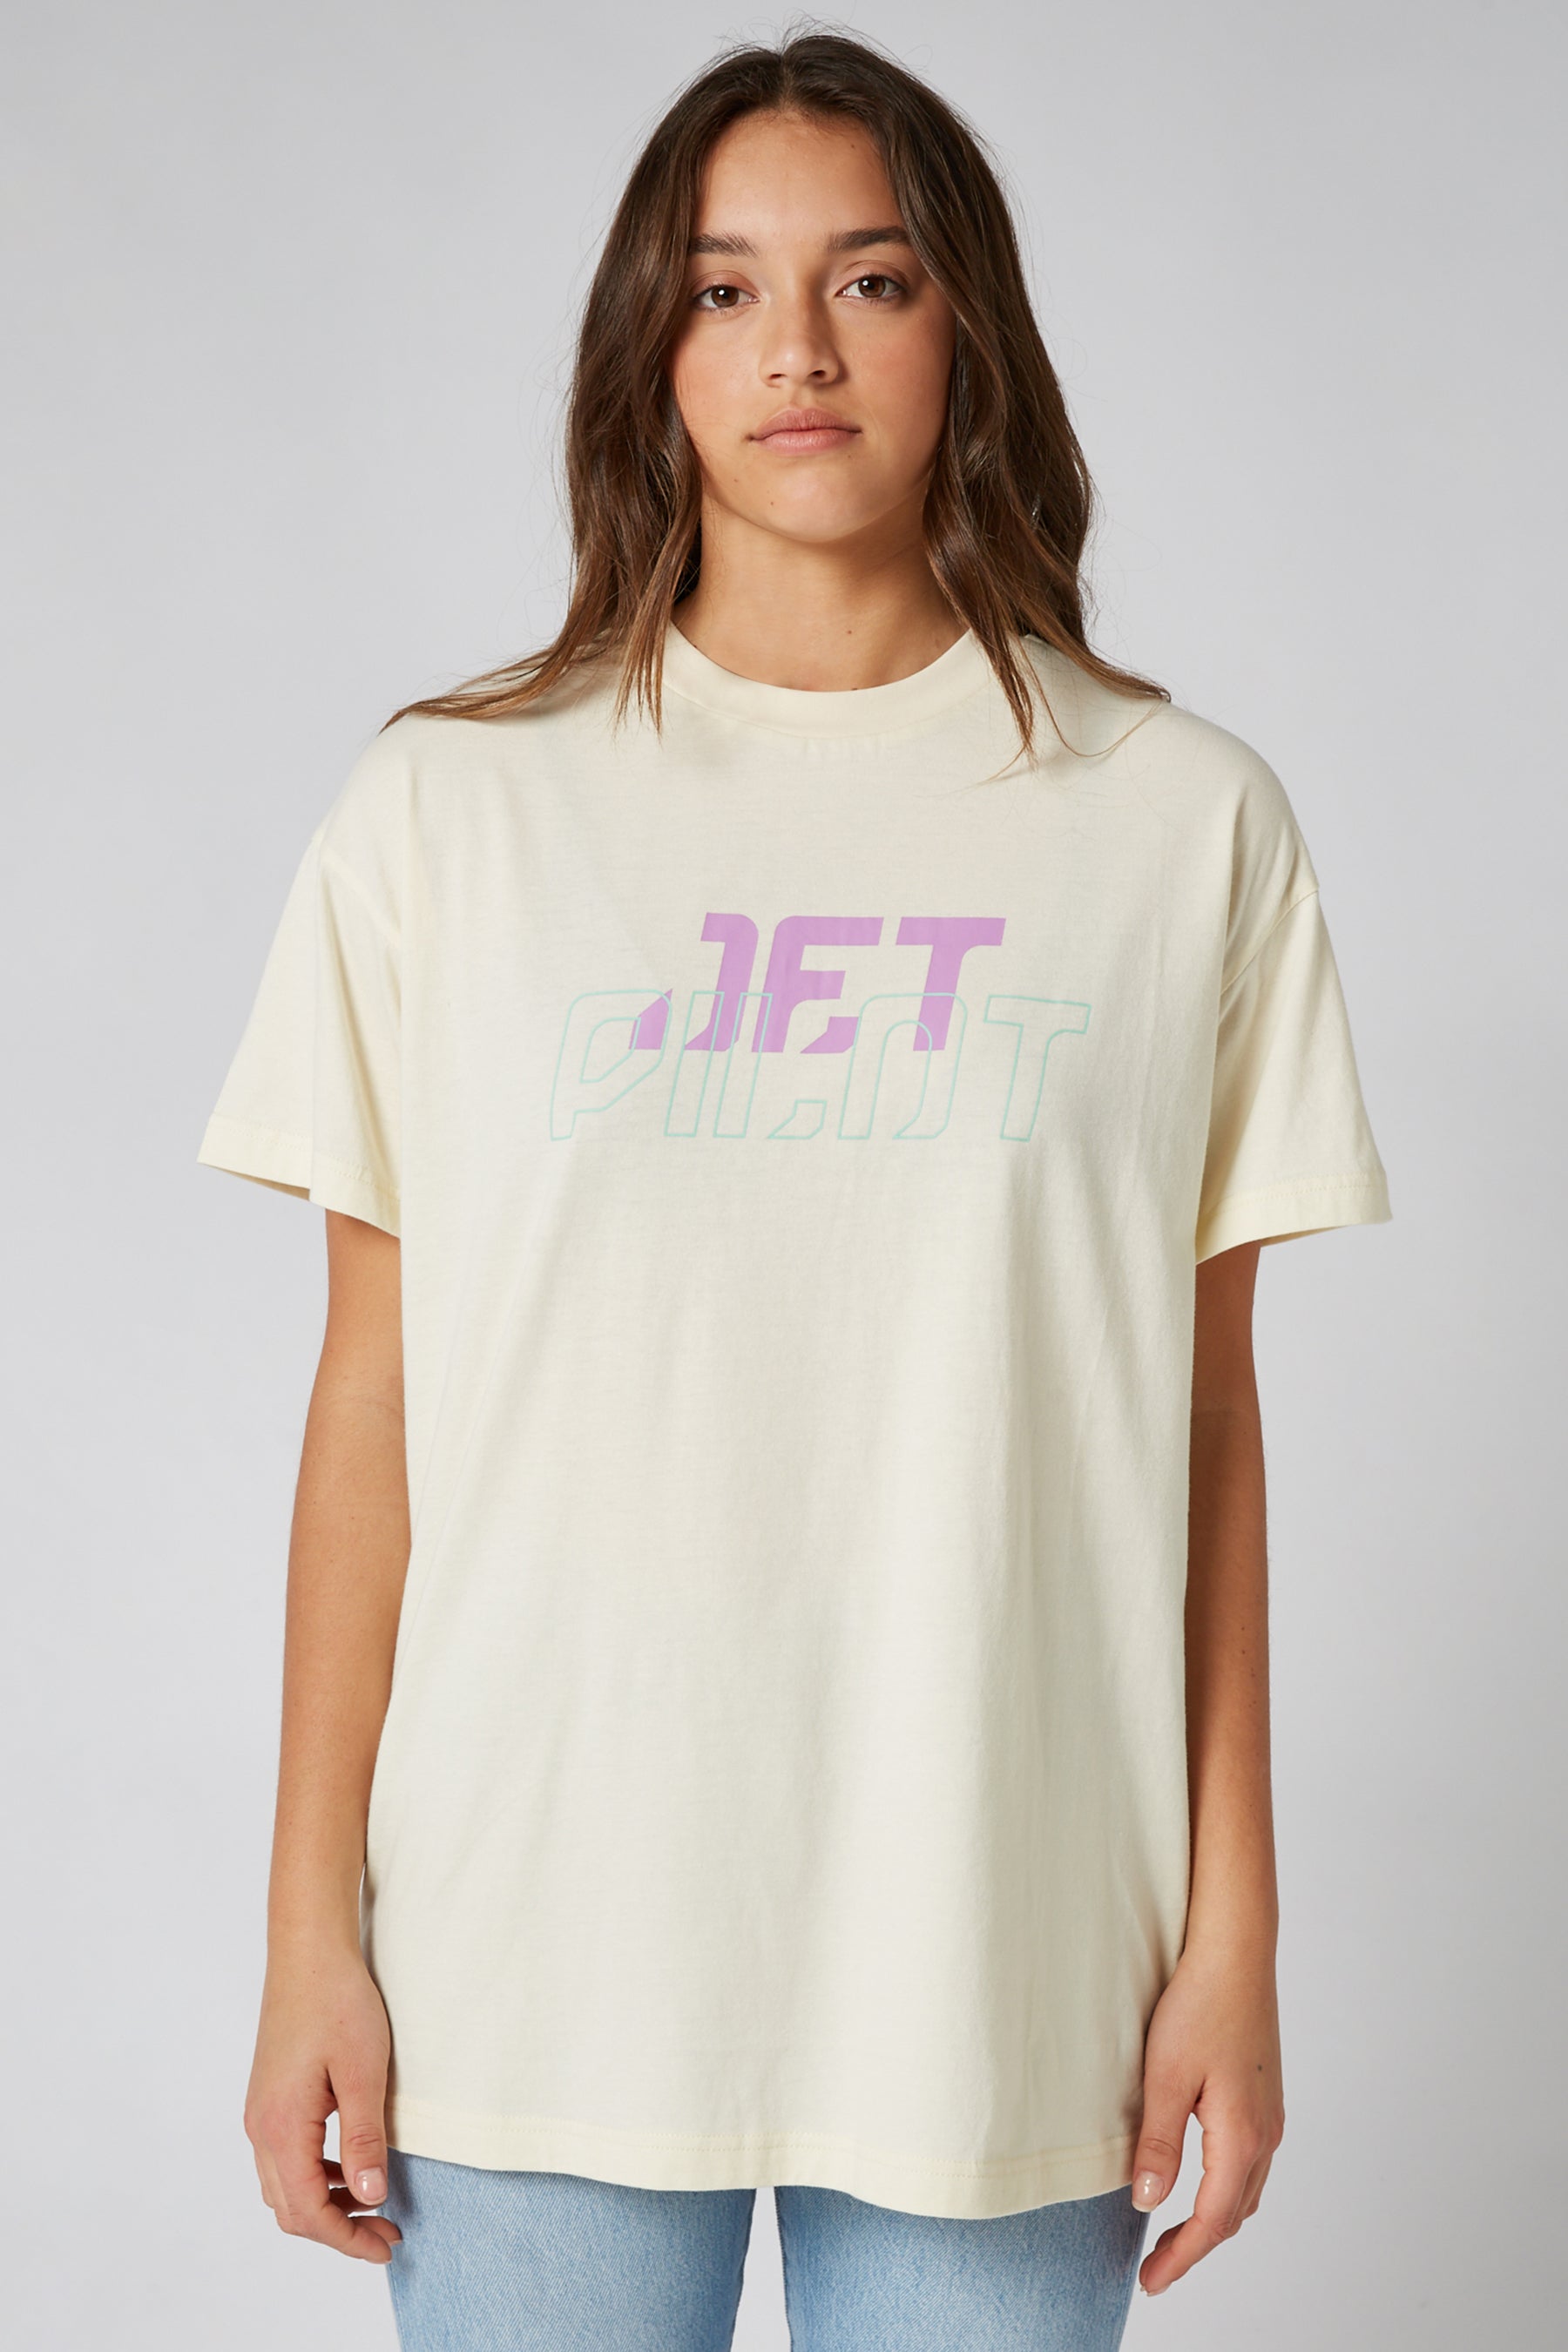 Jetpilot Orbital Ladies S/S Tee - Off White